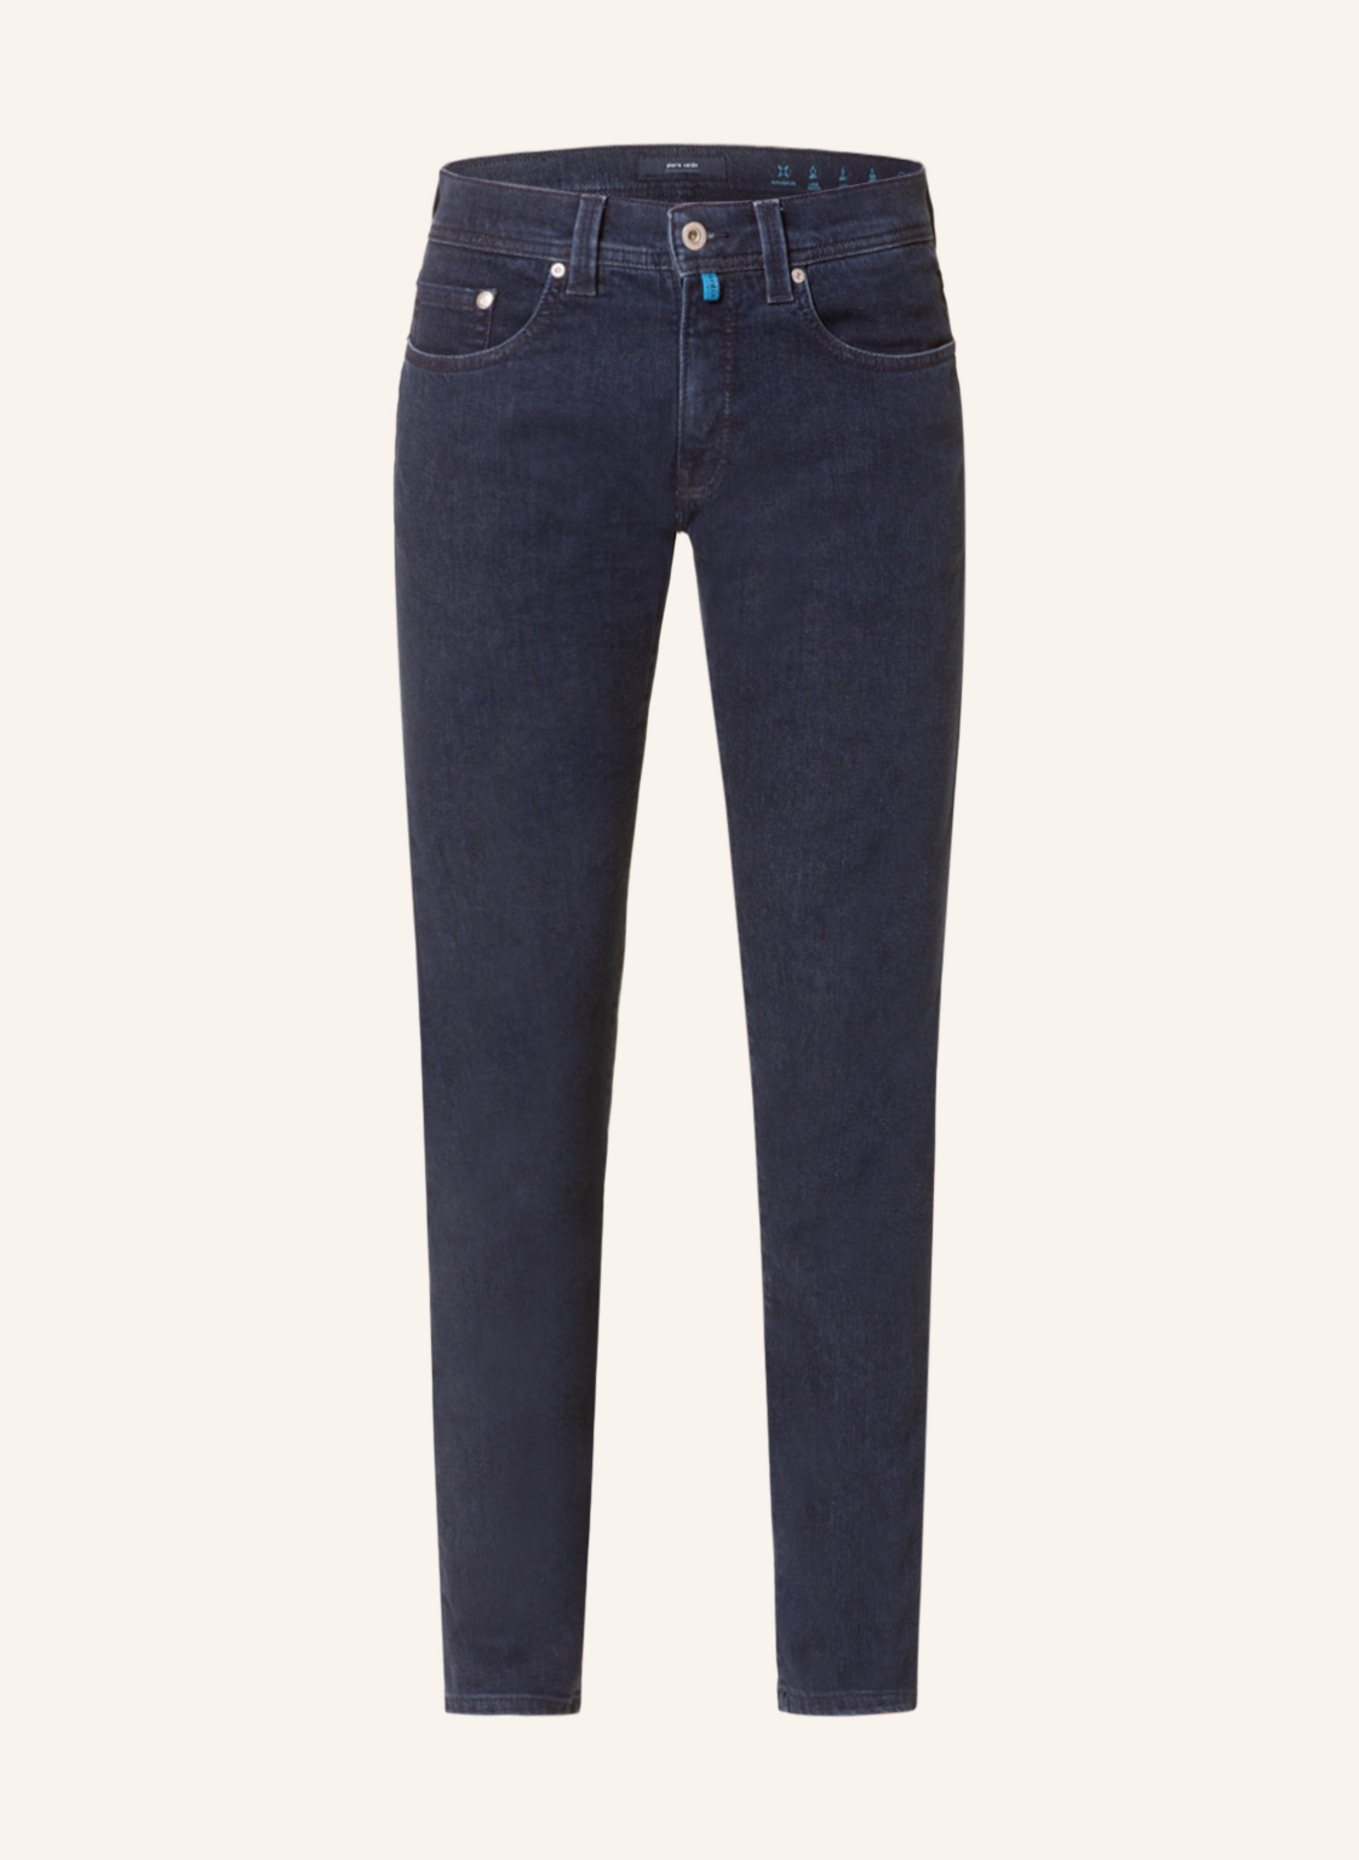 pierre cardin Jeans LYON TAPERED Modern Fit , Farbe: 6821 blue stonewash (Bild 1)